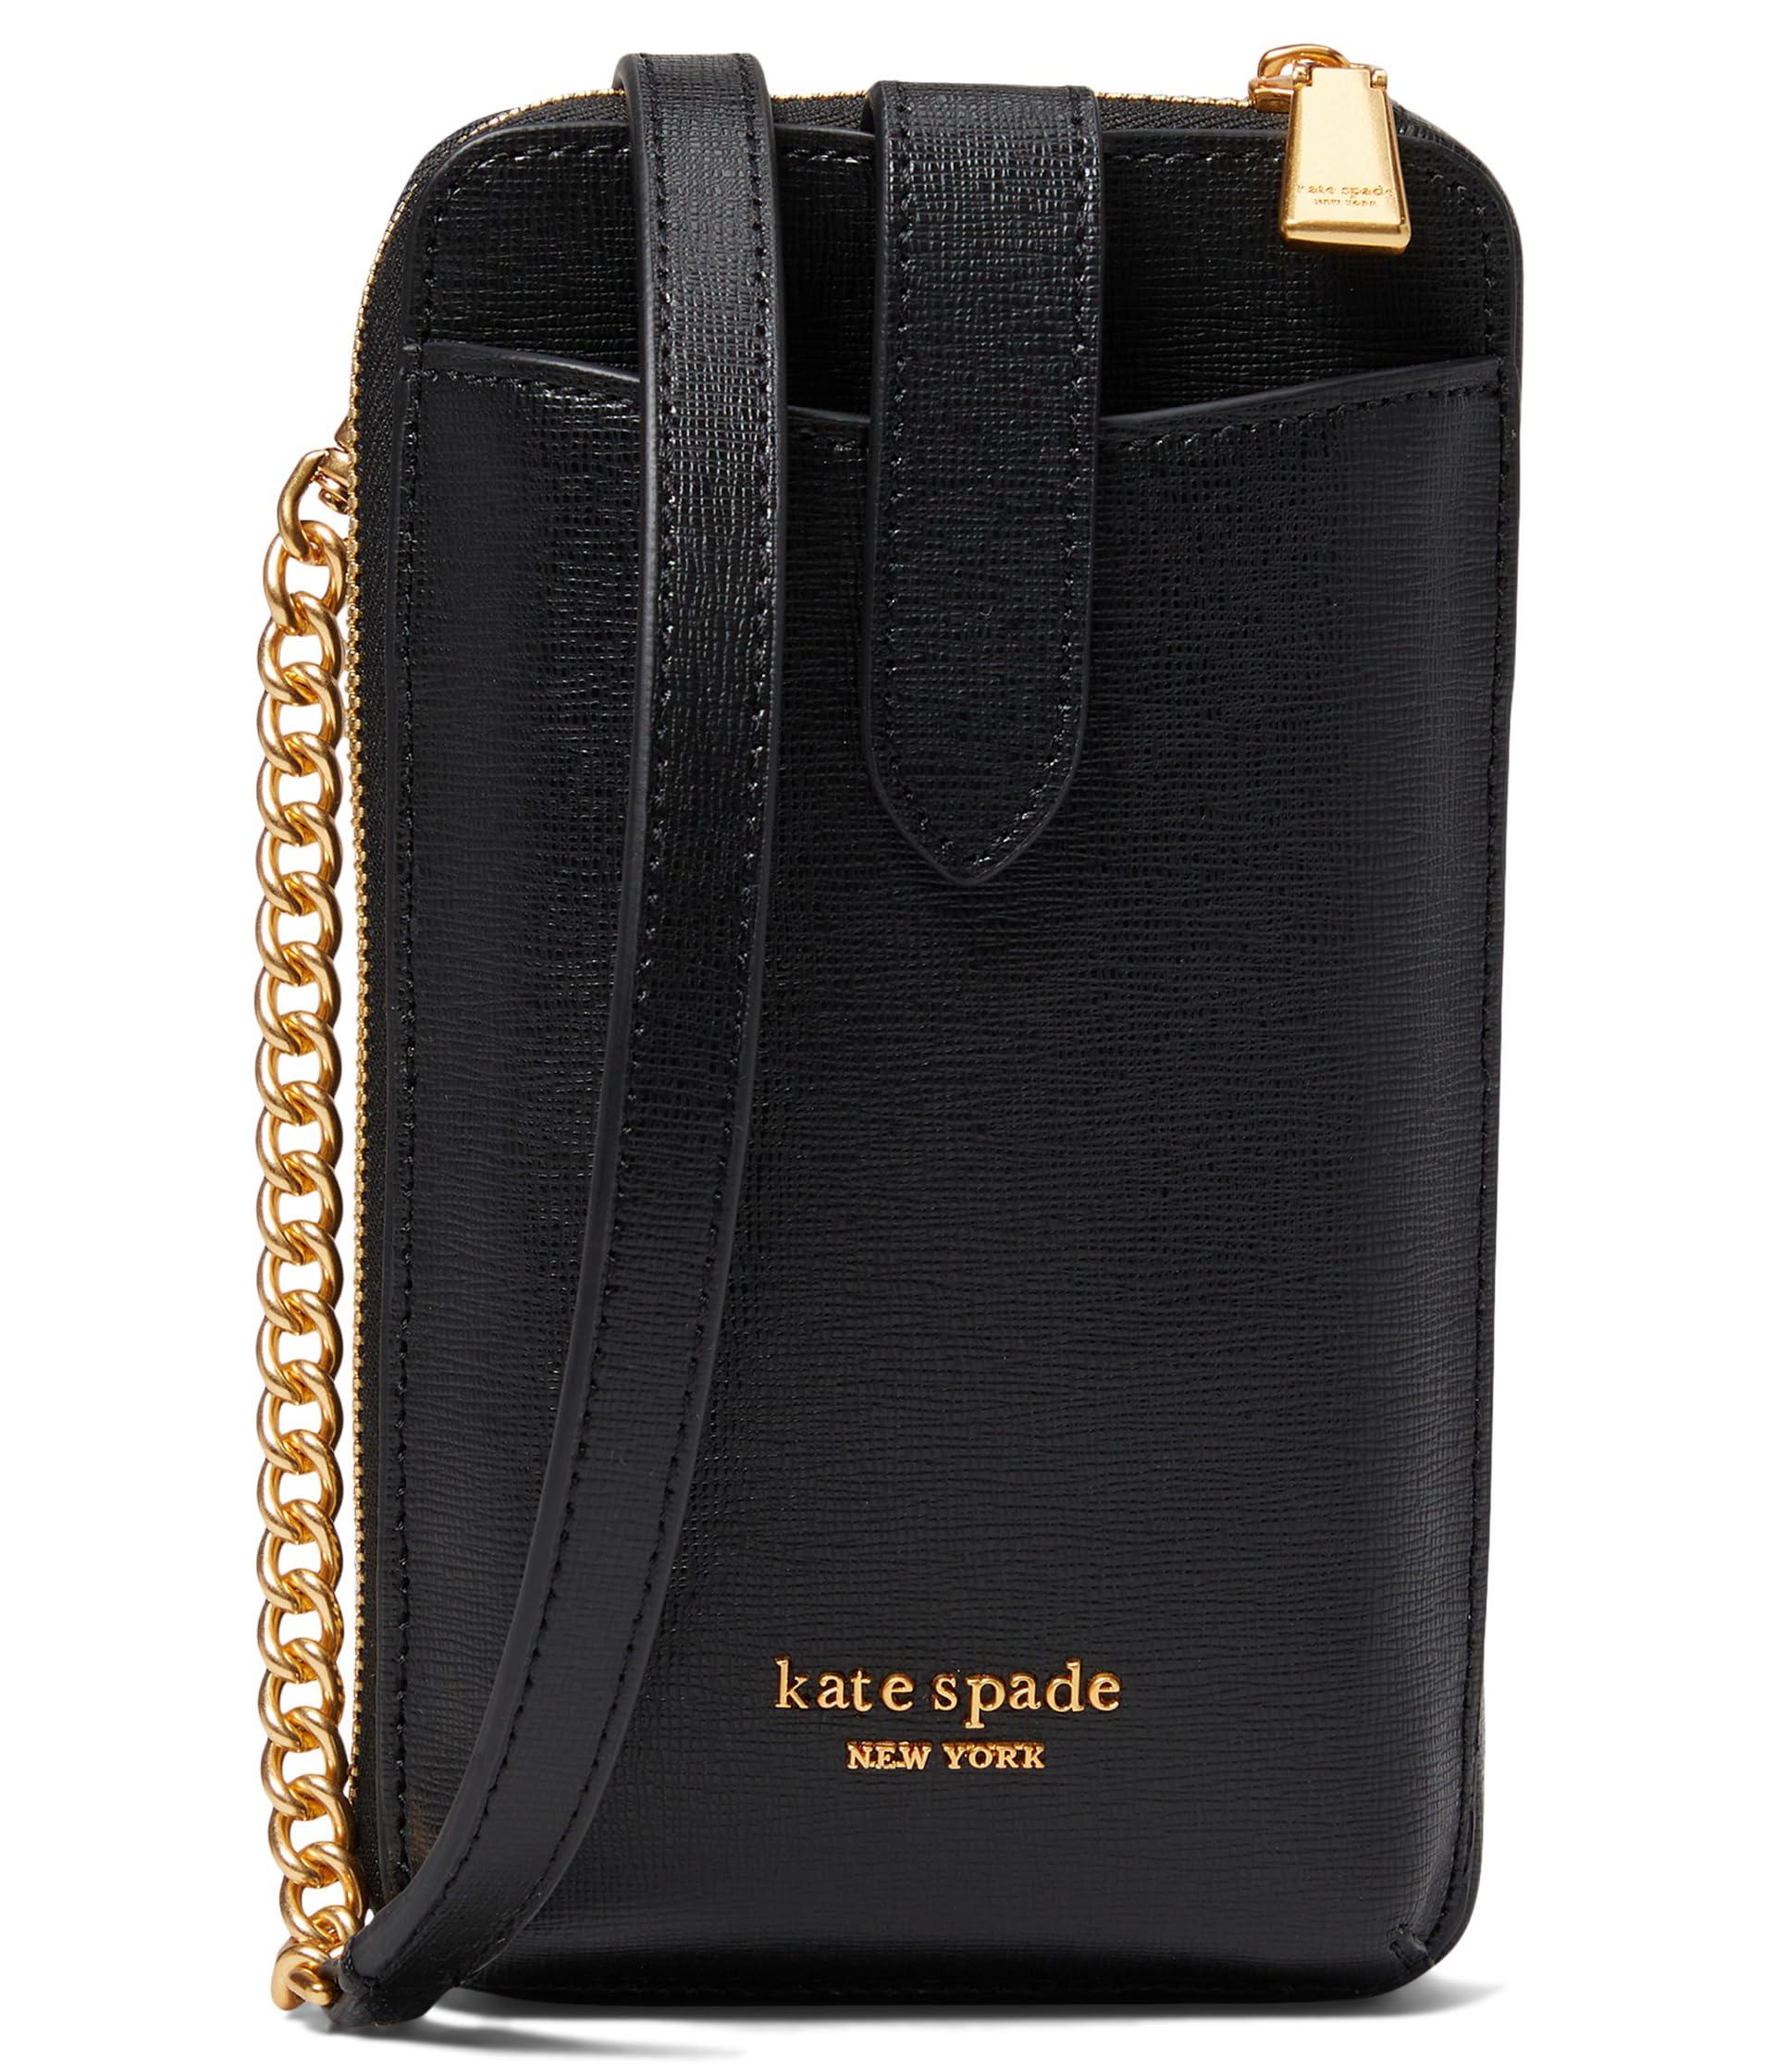 Kate Spade New York Morgan Crystal Inlay Crossbody Bag